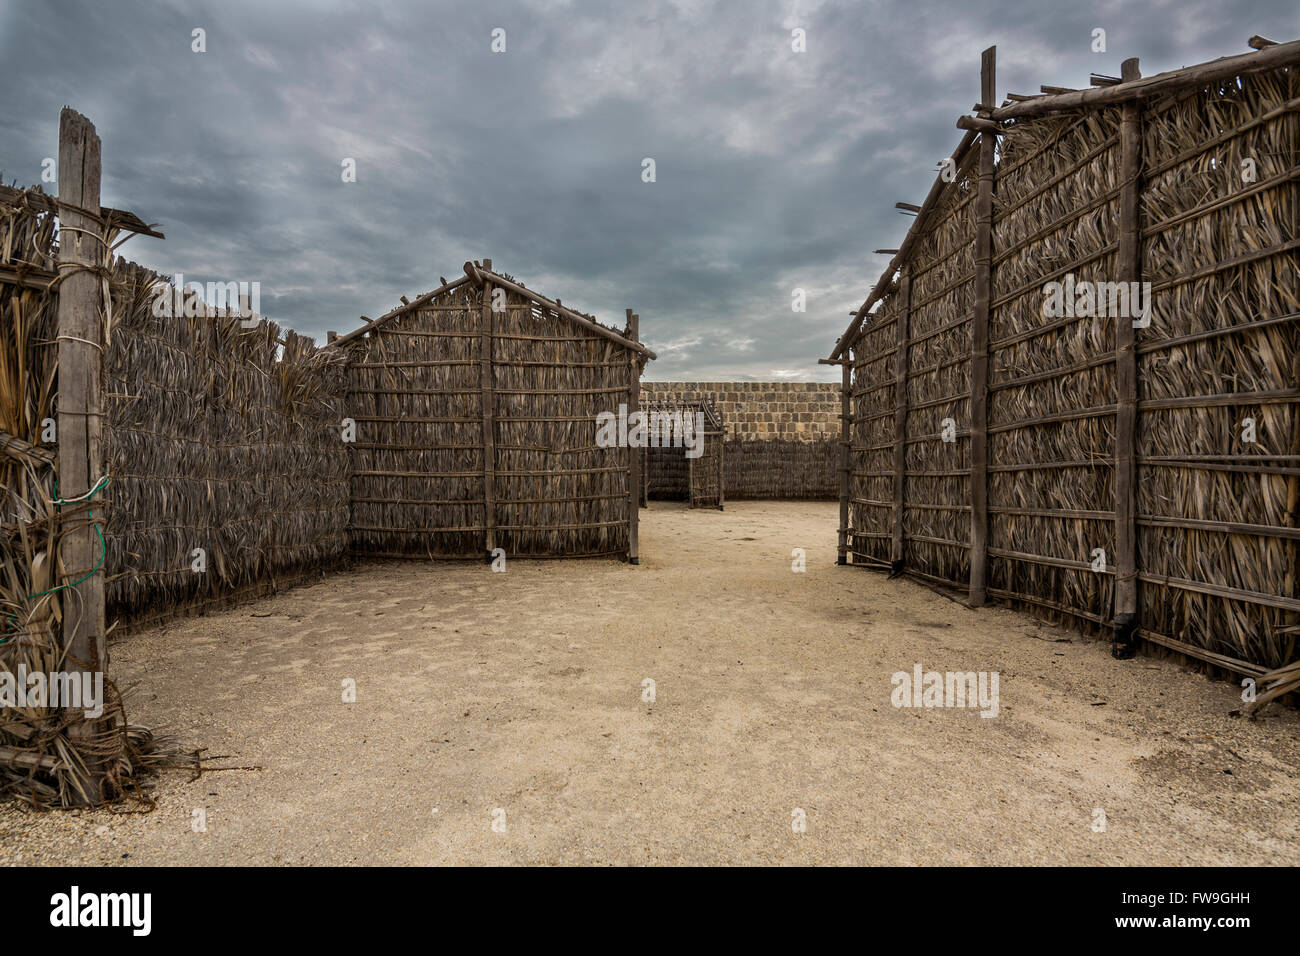 arish or barasti huts, Qal'at al-Bahrain, also known as the Bahrain Fort Stock Photo